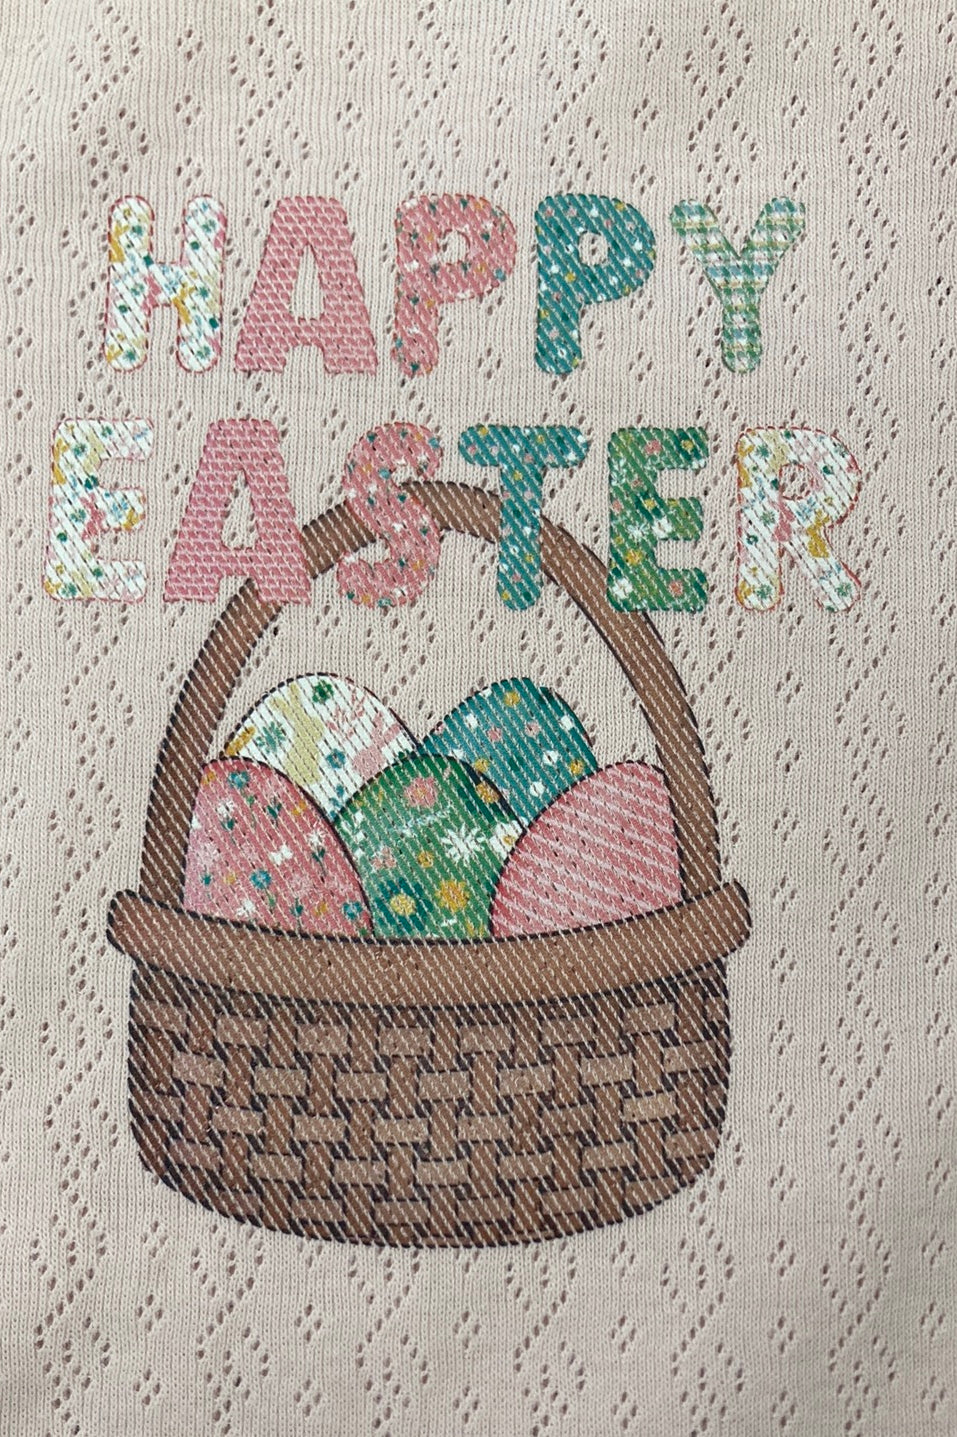 Happy Easter Basket Onesie - Final Sale     Daydreamer Creations- Tilden Co.